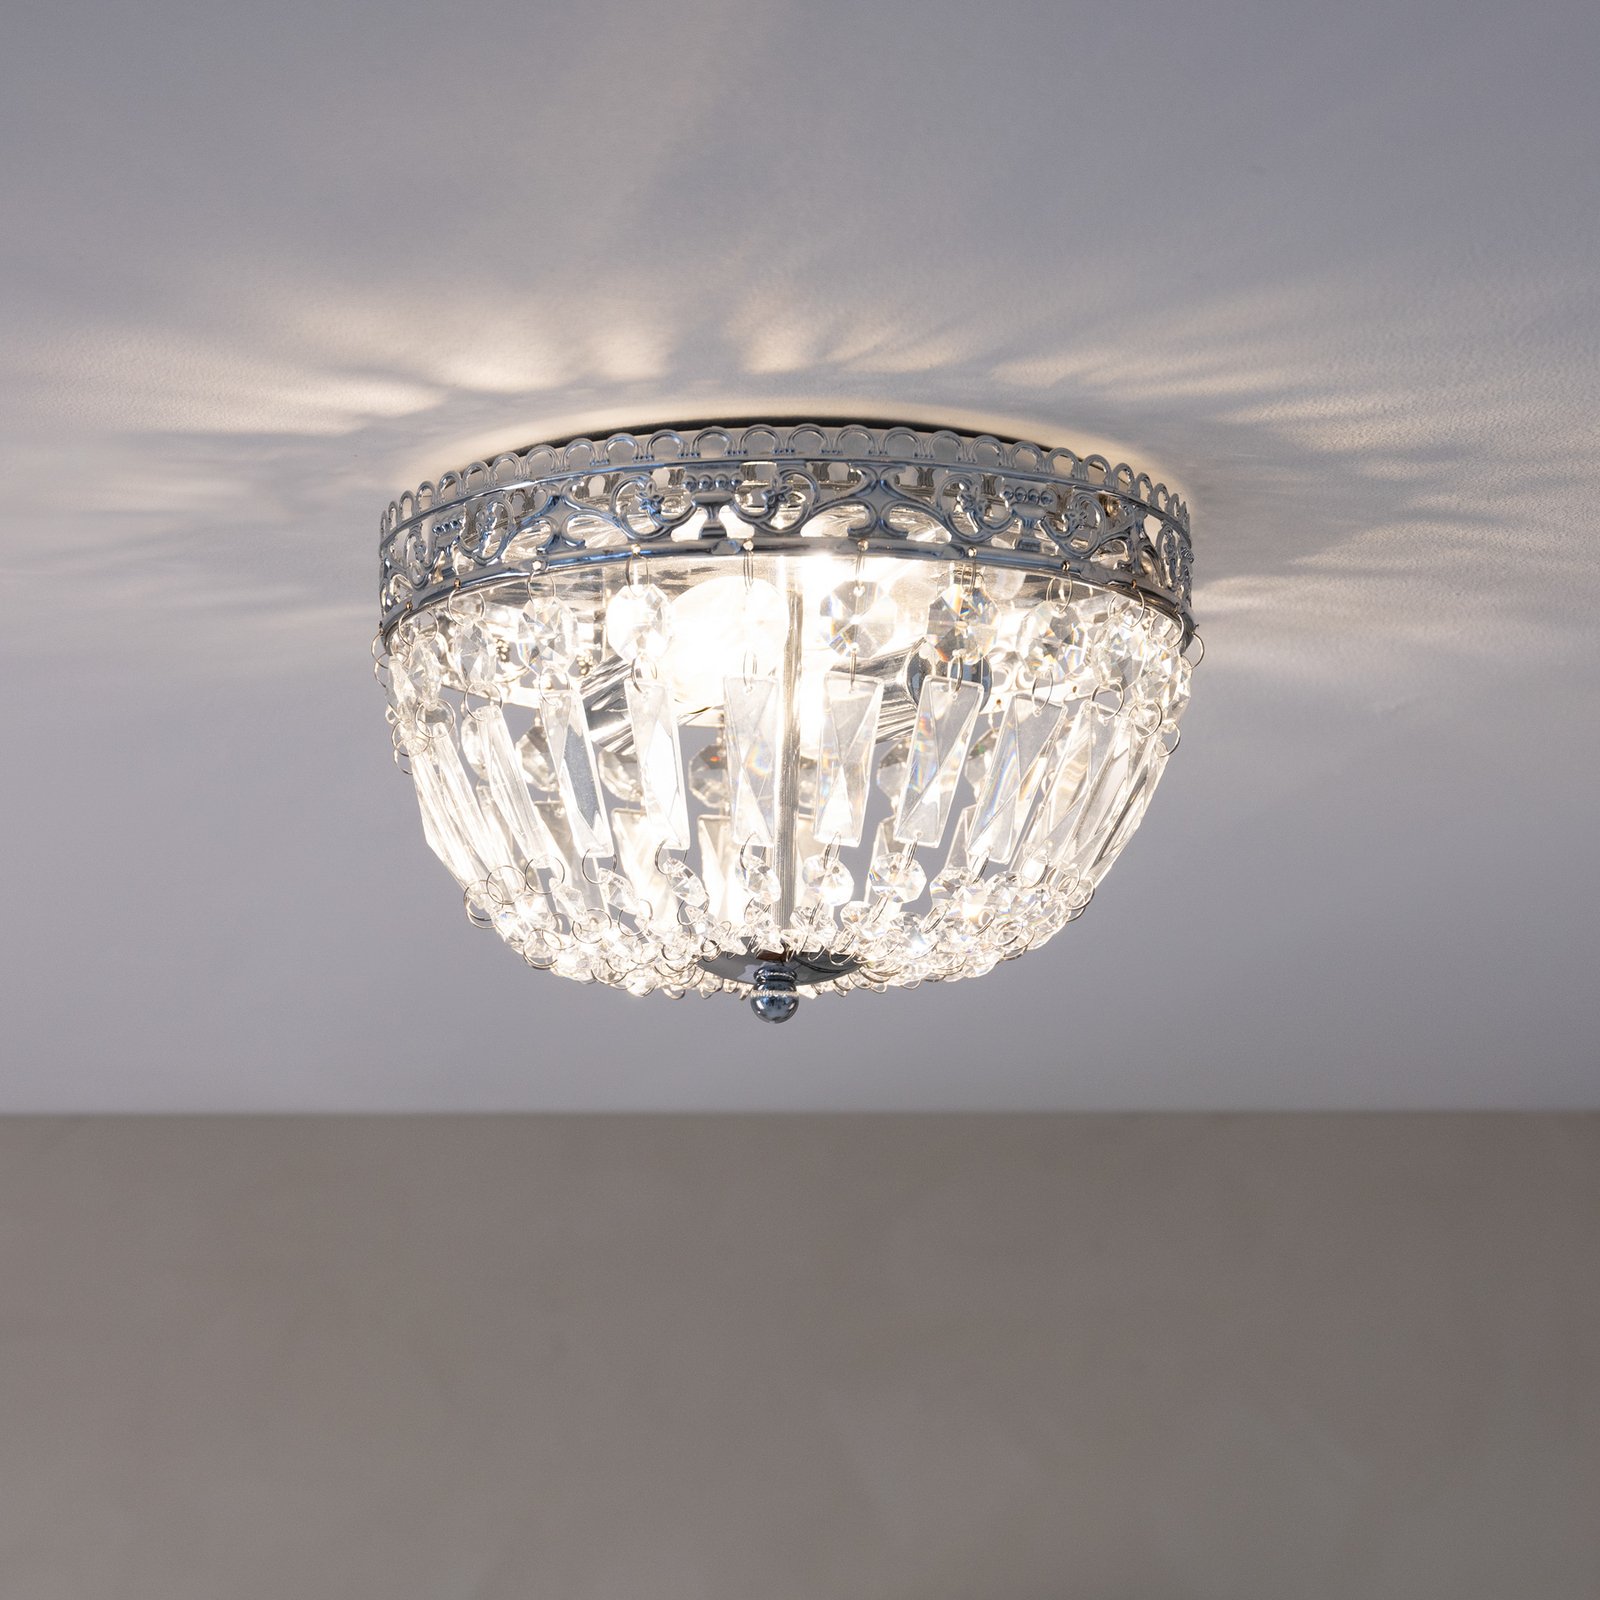 Etienne ceiling lamp glass crystals Ø 25 cm chrome